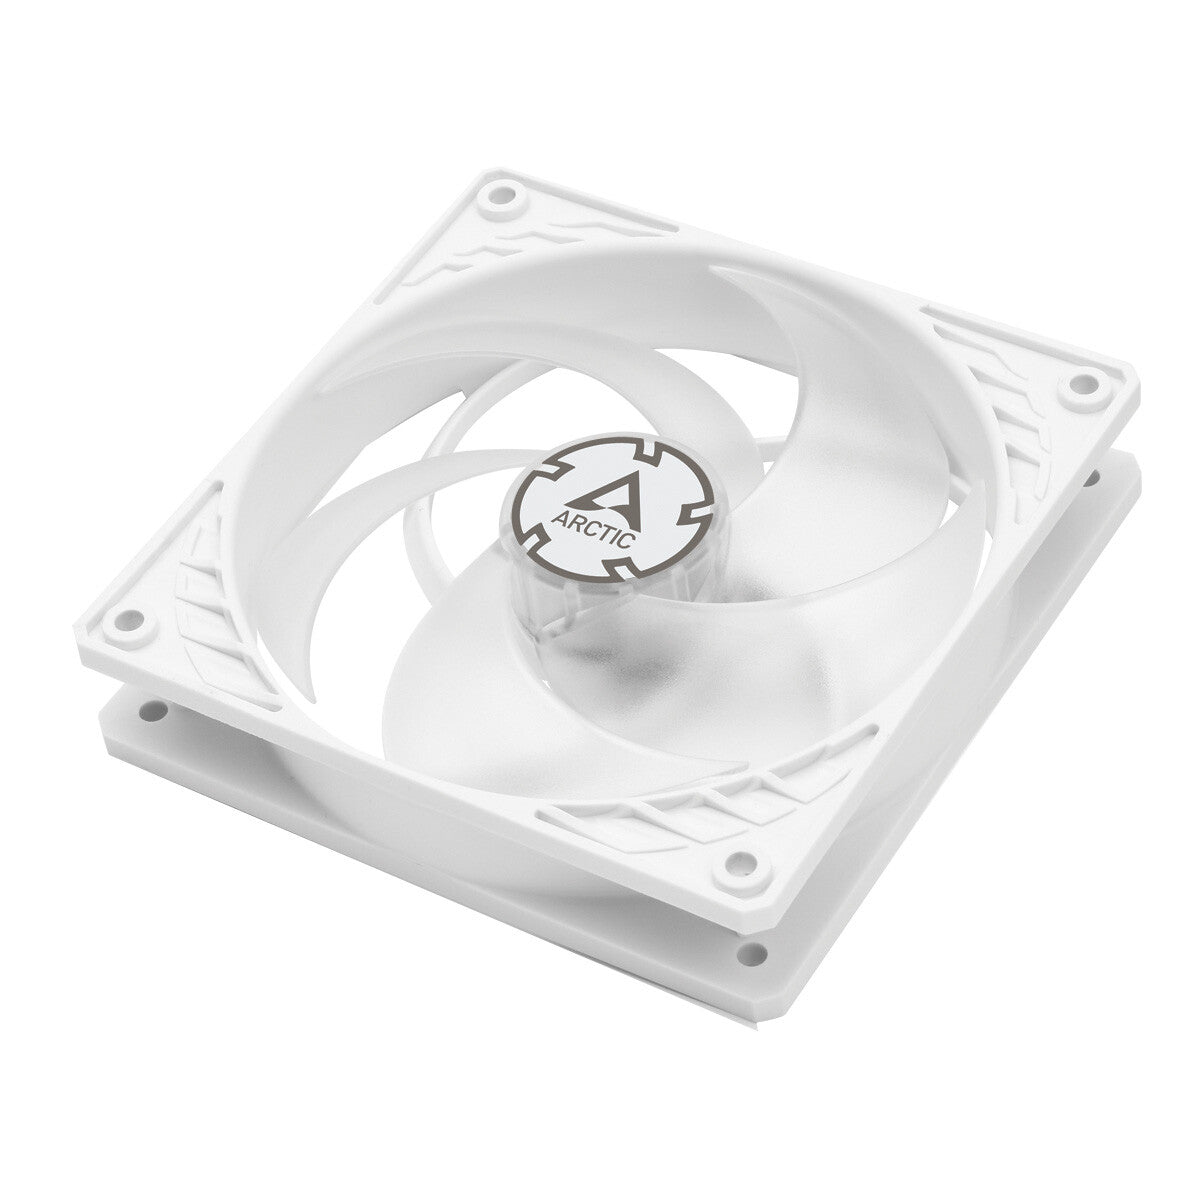 ARCTIC P12 PWM PST - Computer Case Fan in White / Transparent - 120mm